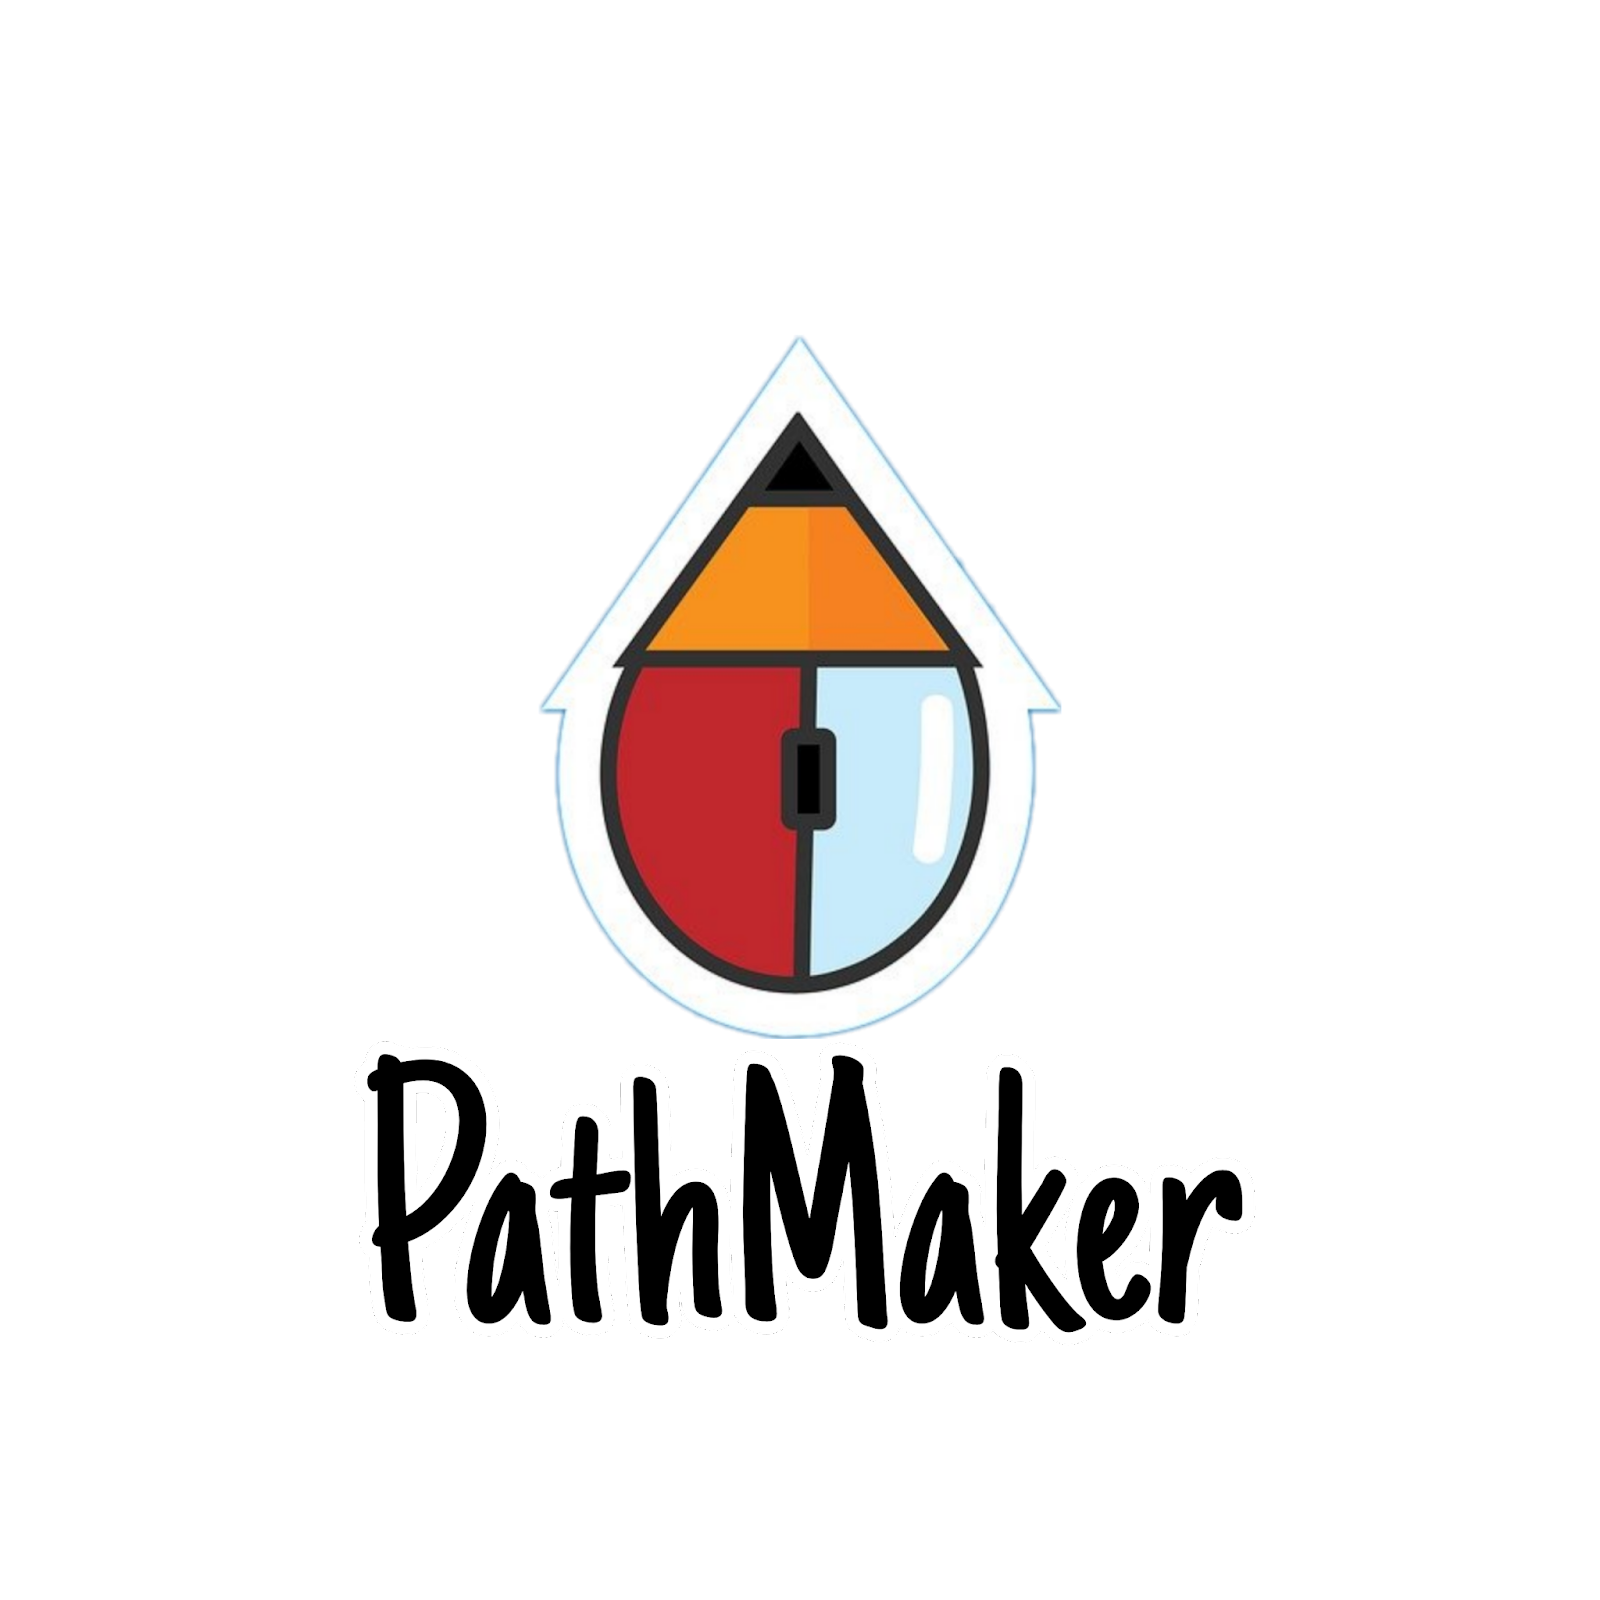 PathMaker